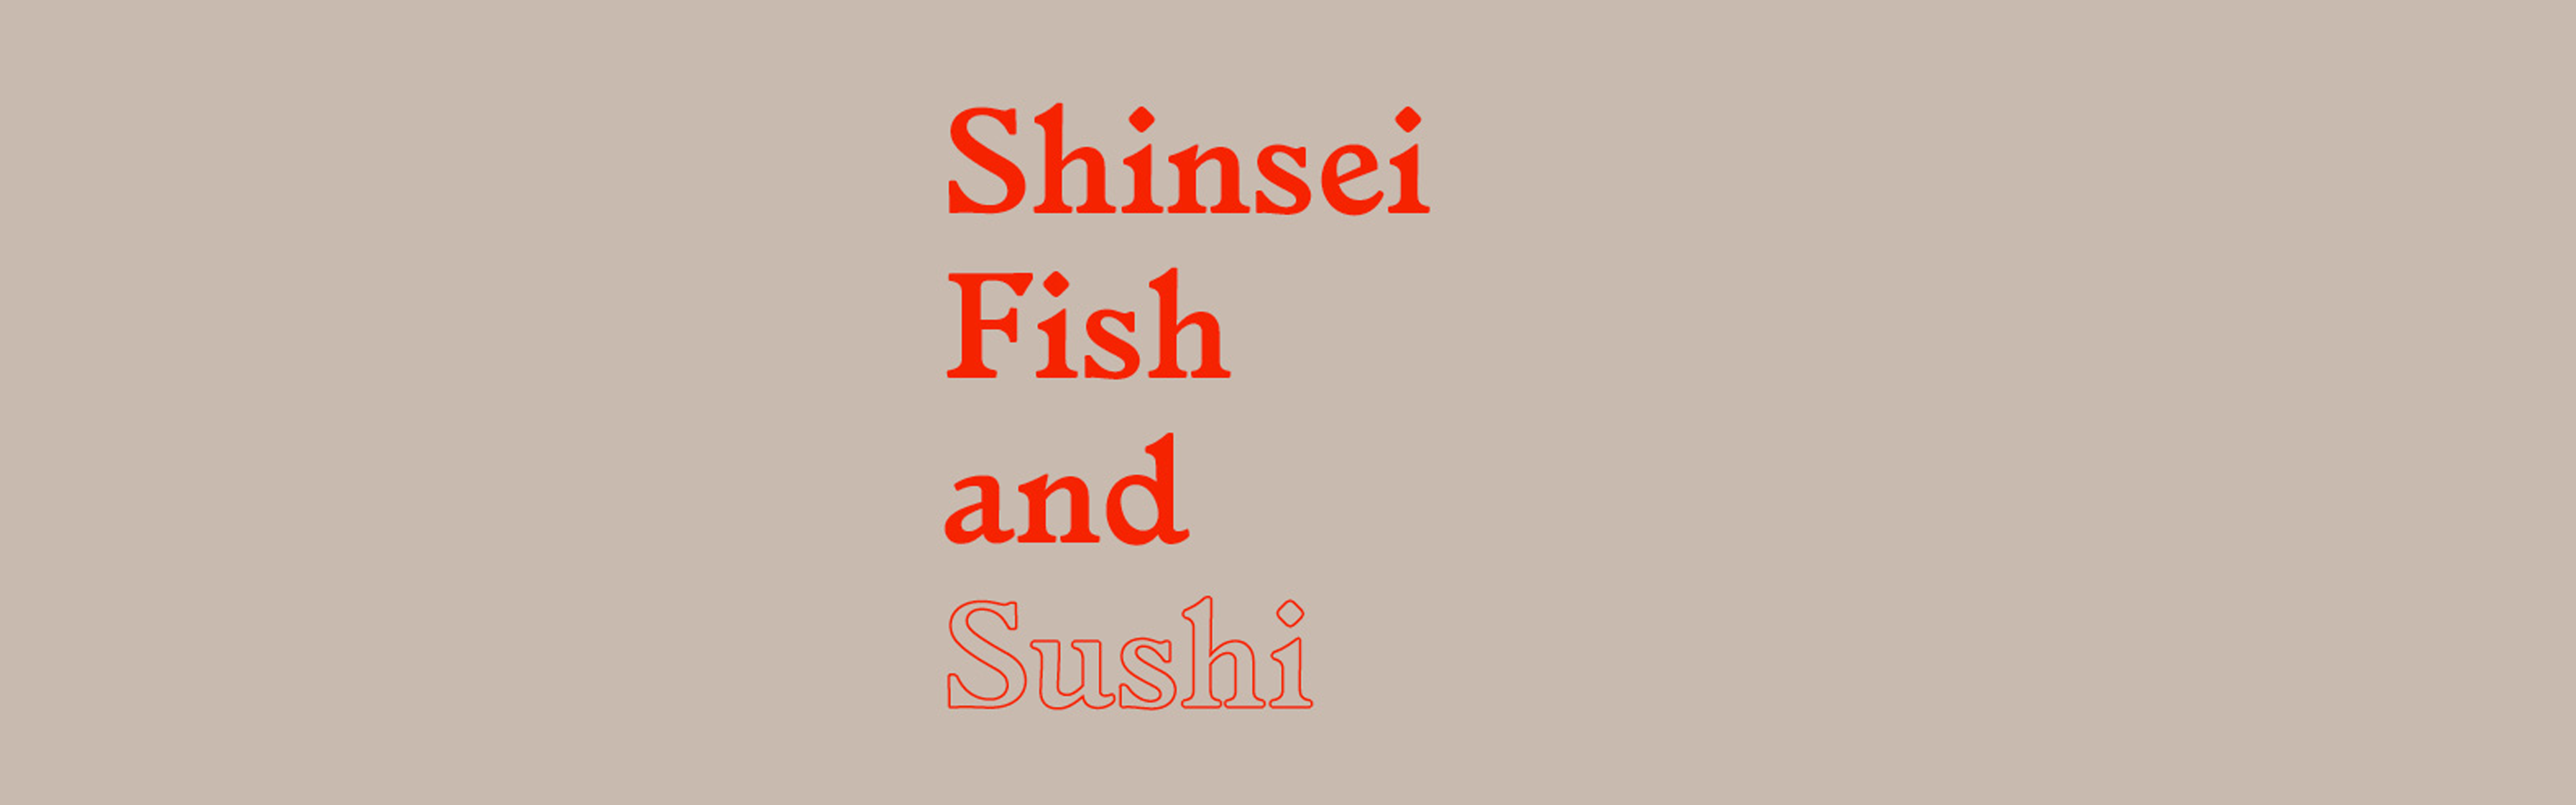 Shinsei-Fish-and-Sushi-banner.png